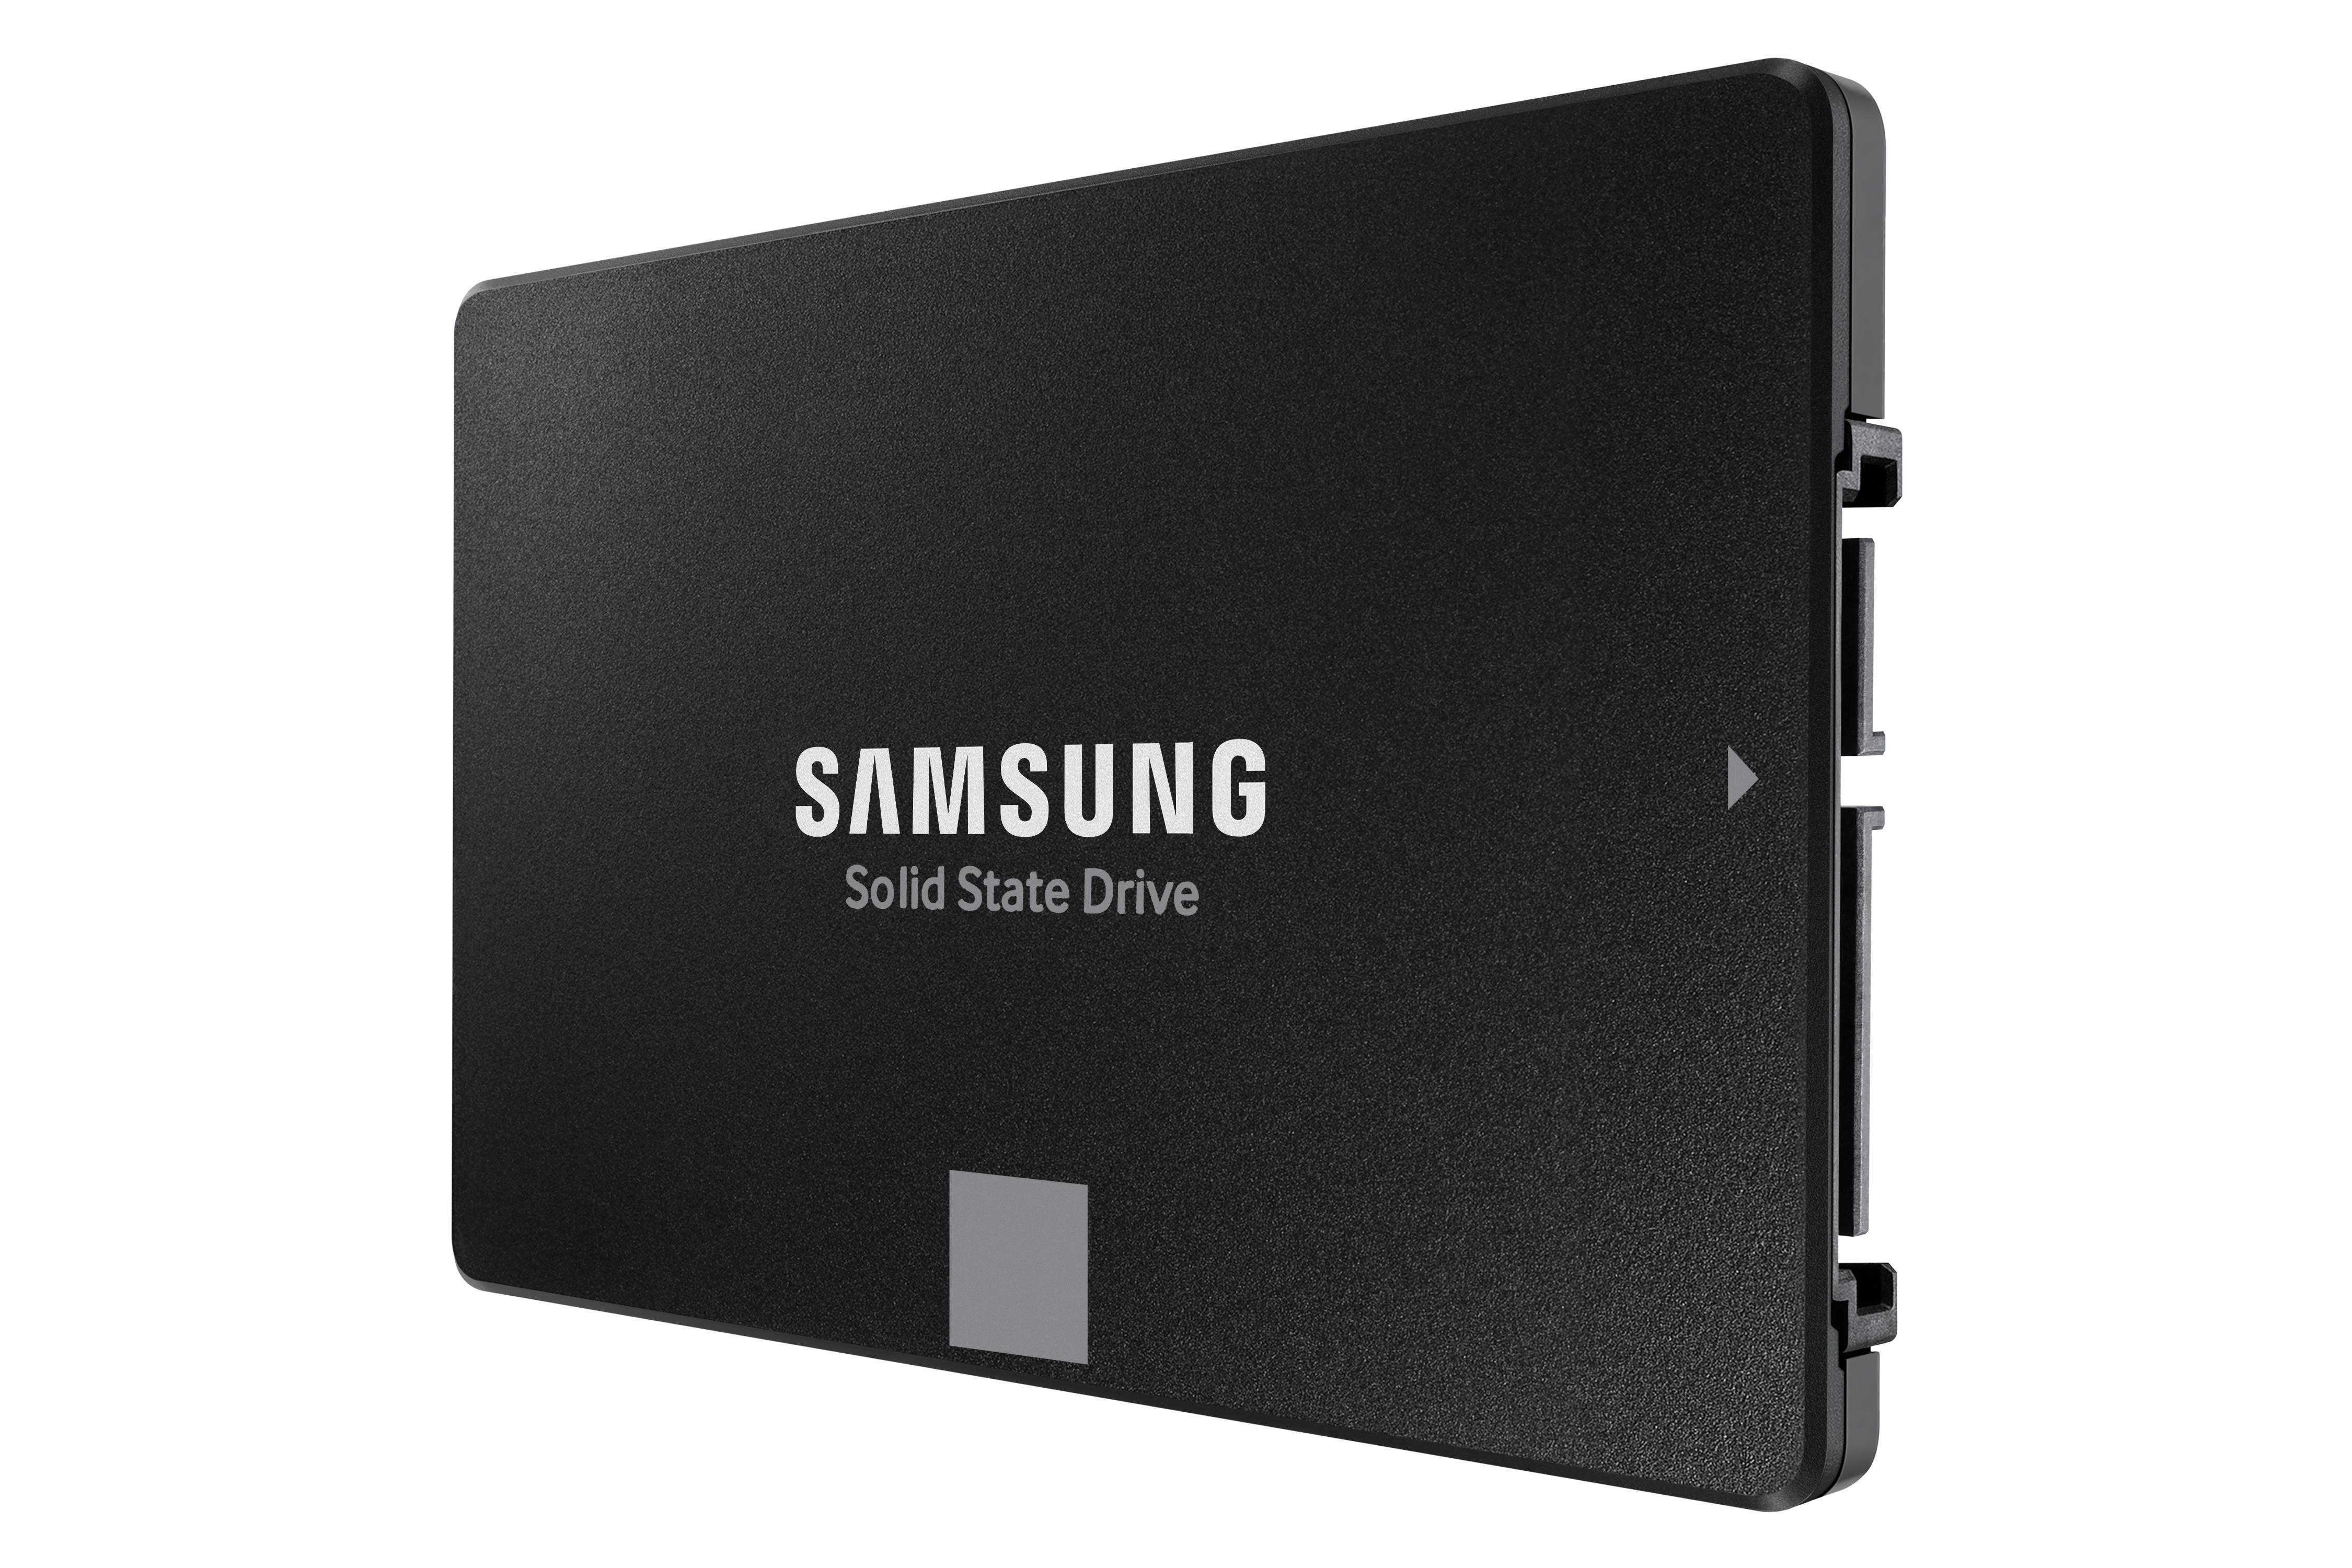 6 Retail, 500 SATA Gbps, SAMSUNG 2,5 EVO GB SSD Festplatte Zoll, intern 870